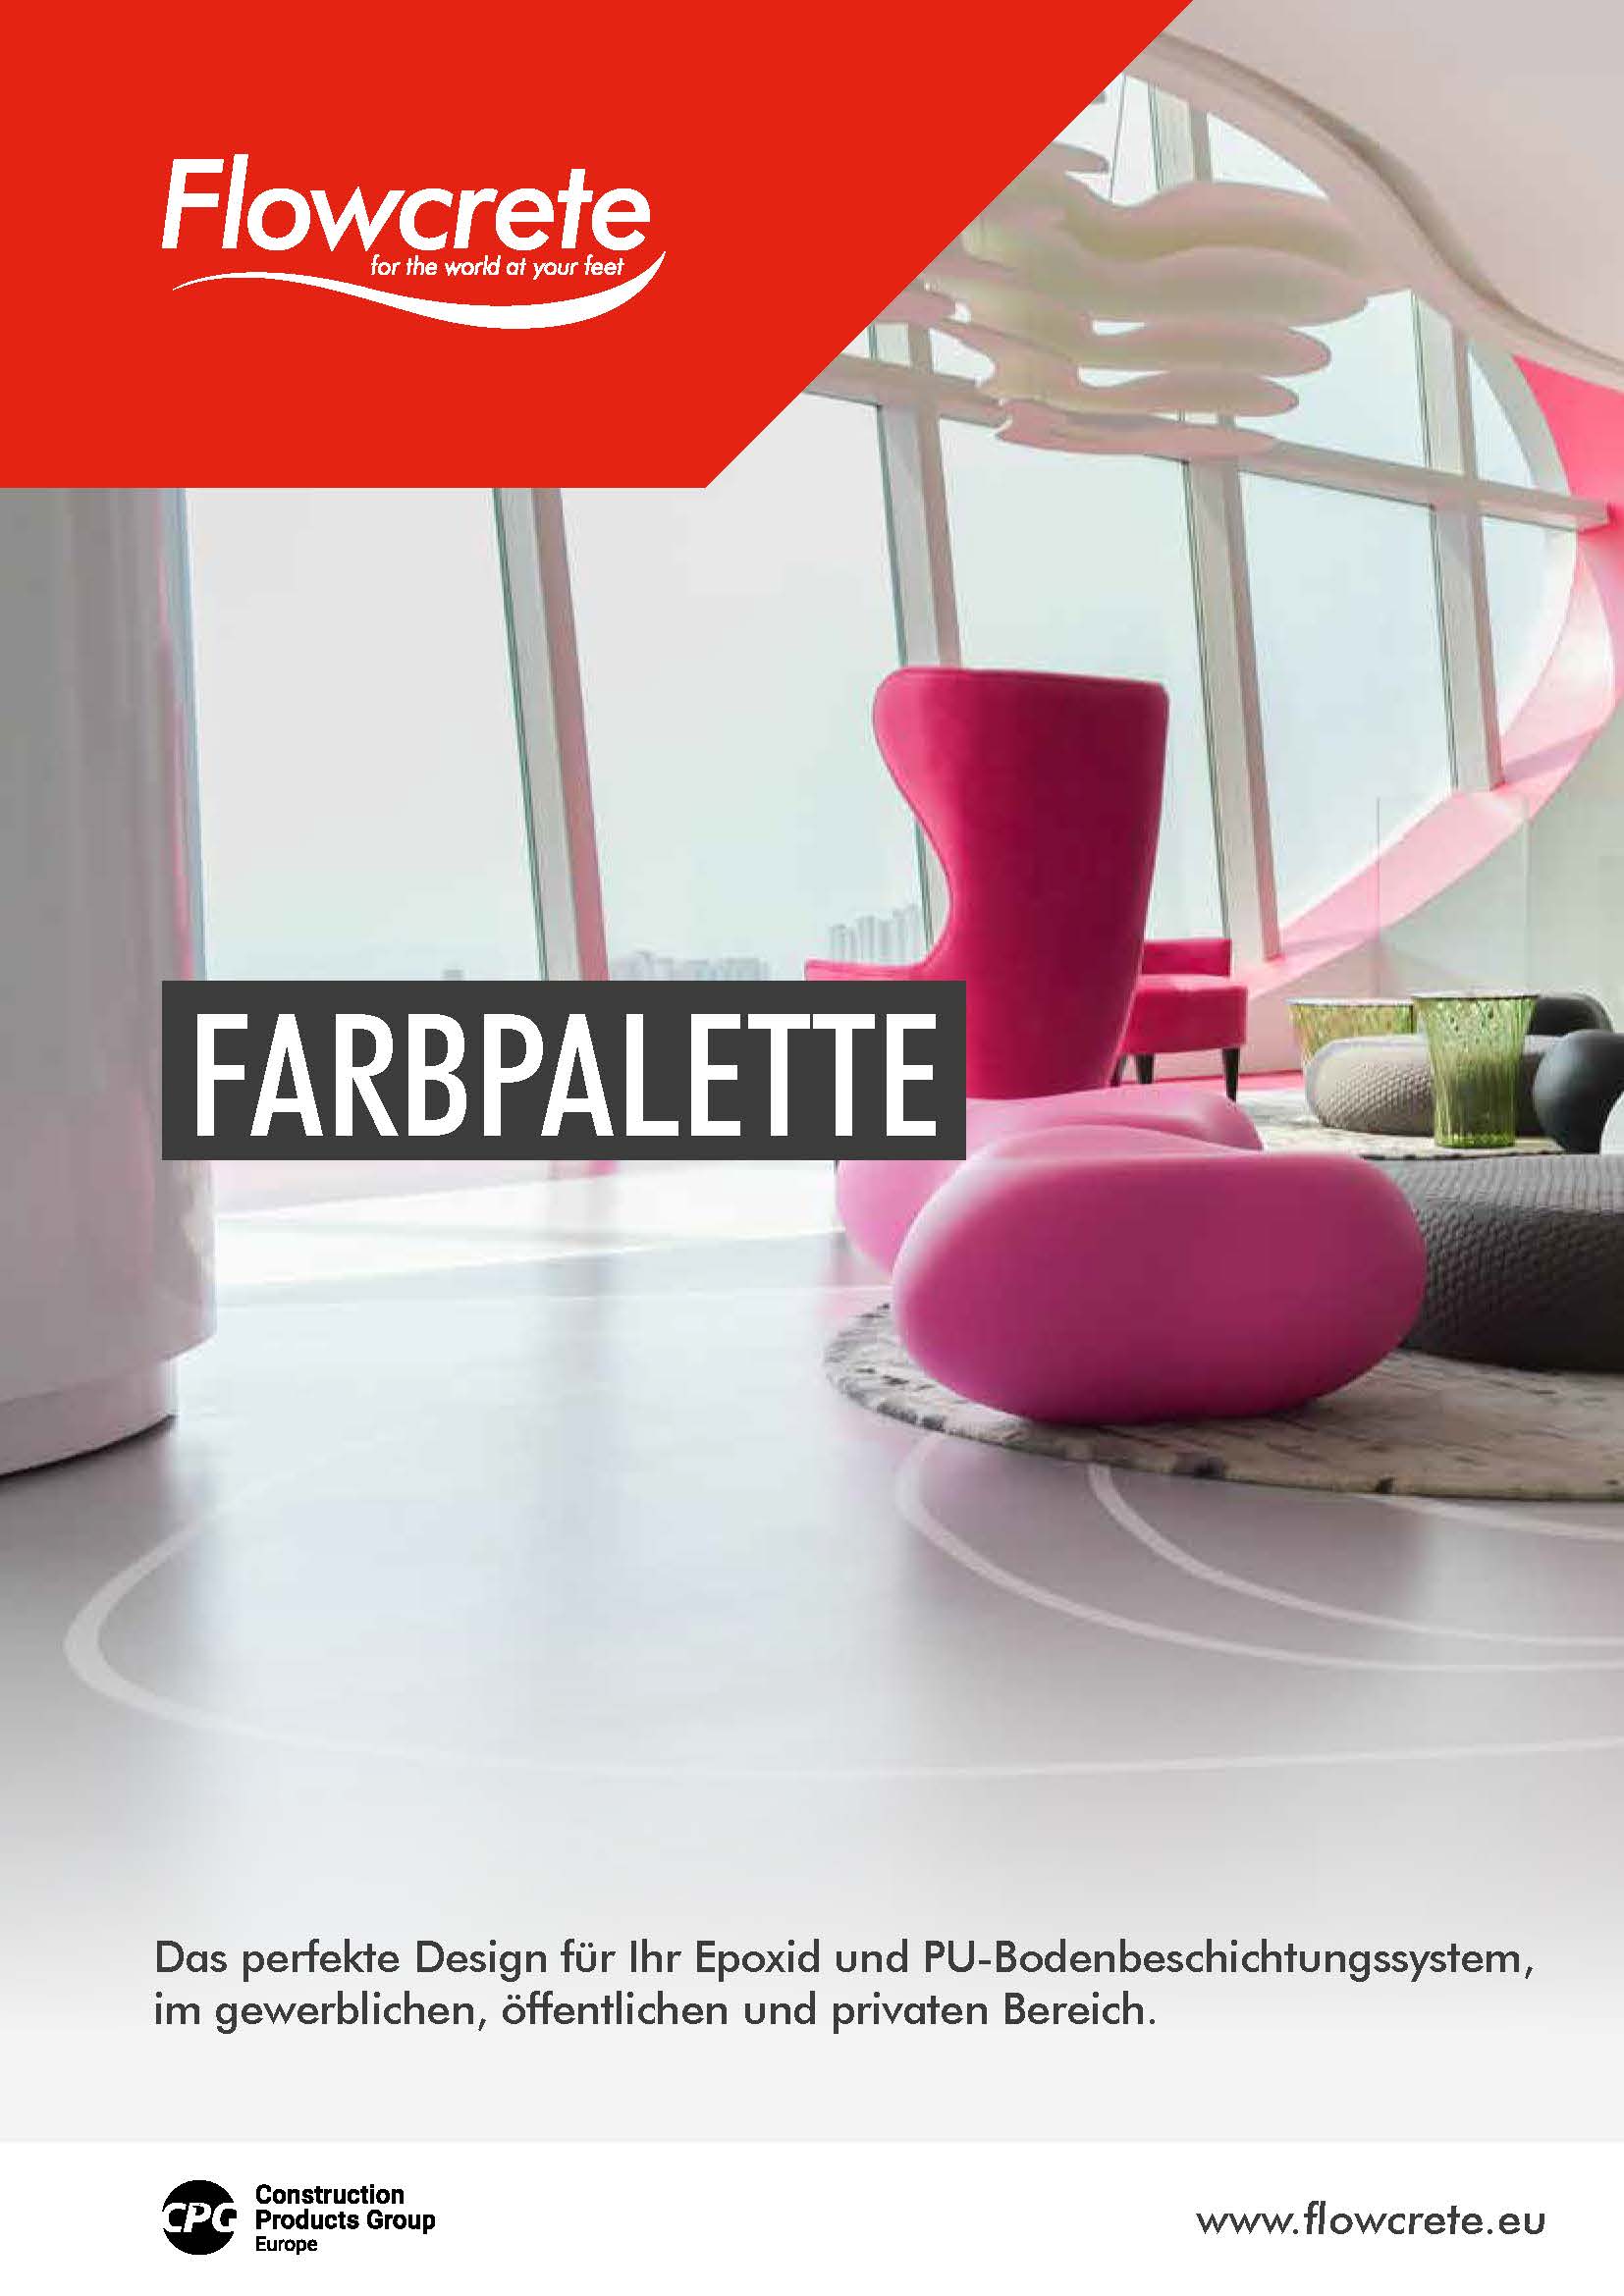 Flowcrete Farbpalette